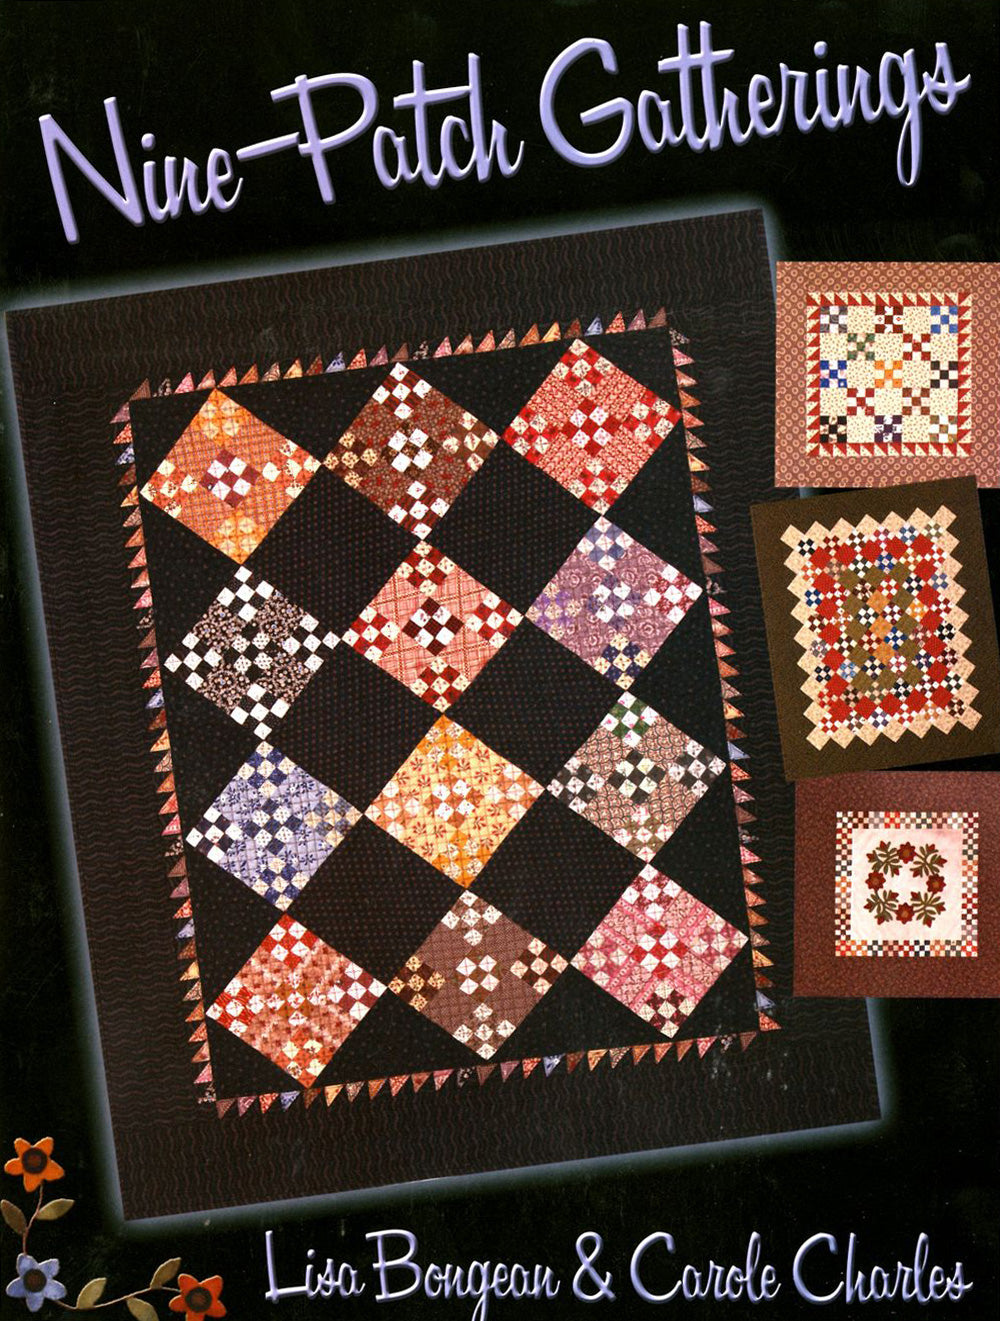 Nine-Patch Gatherings Quilt Pattern Book by Lisa Bongean of Primitive Gatherings